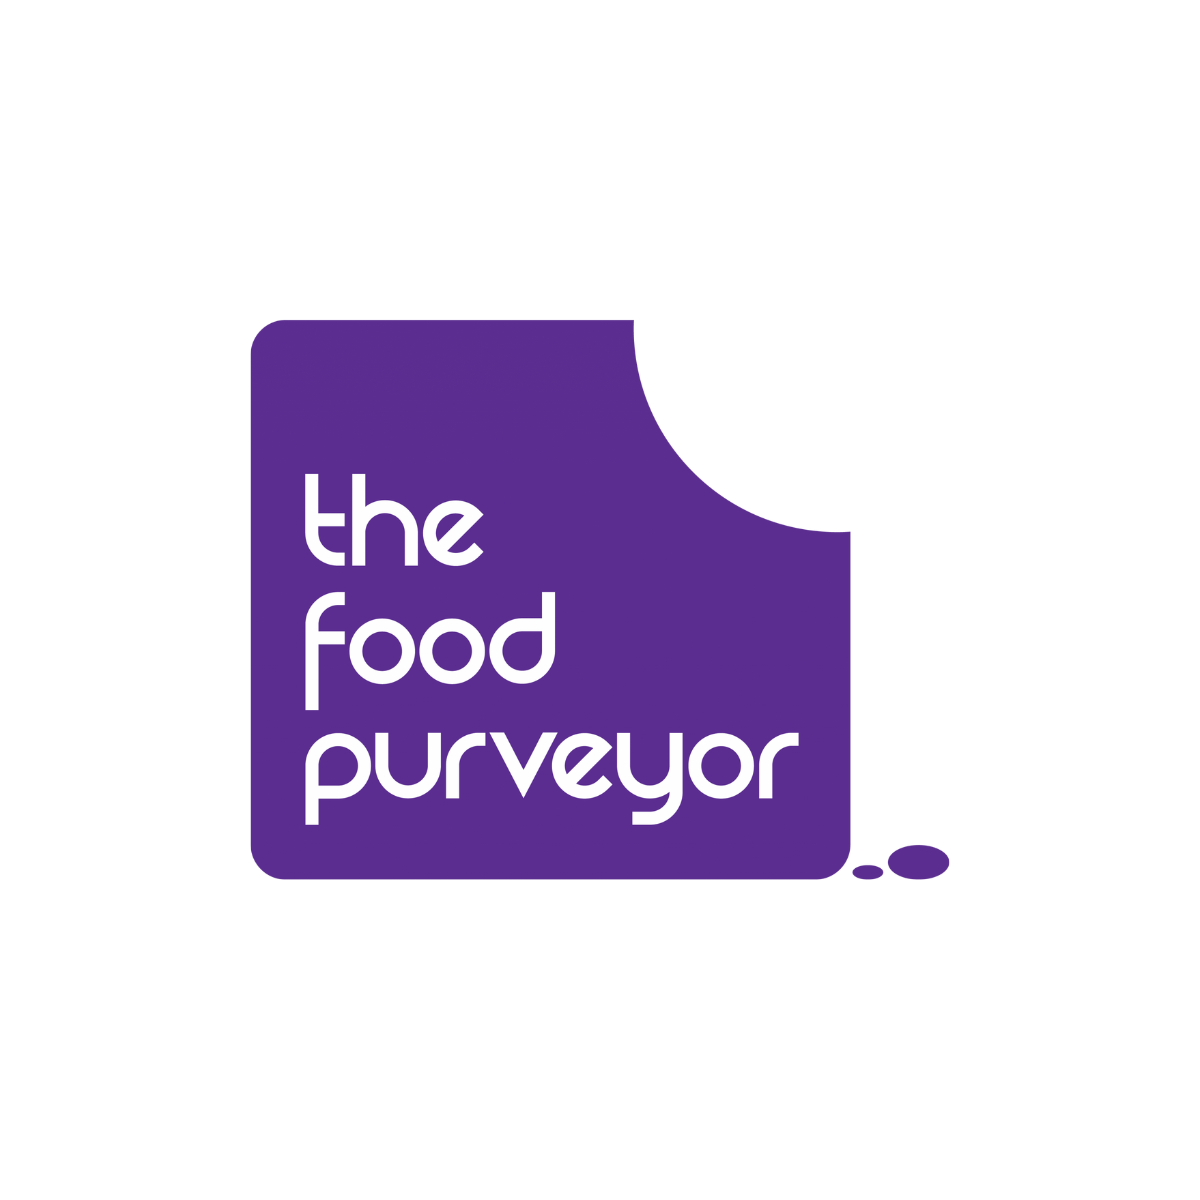 The food purveyor logo